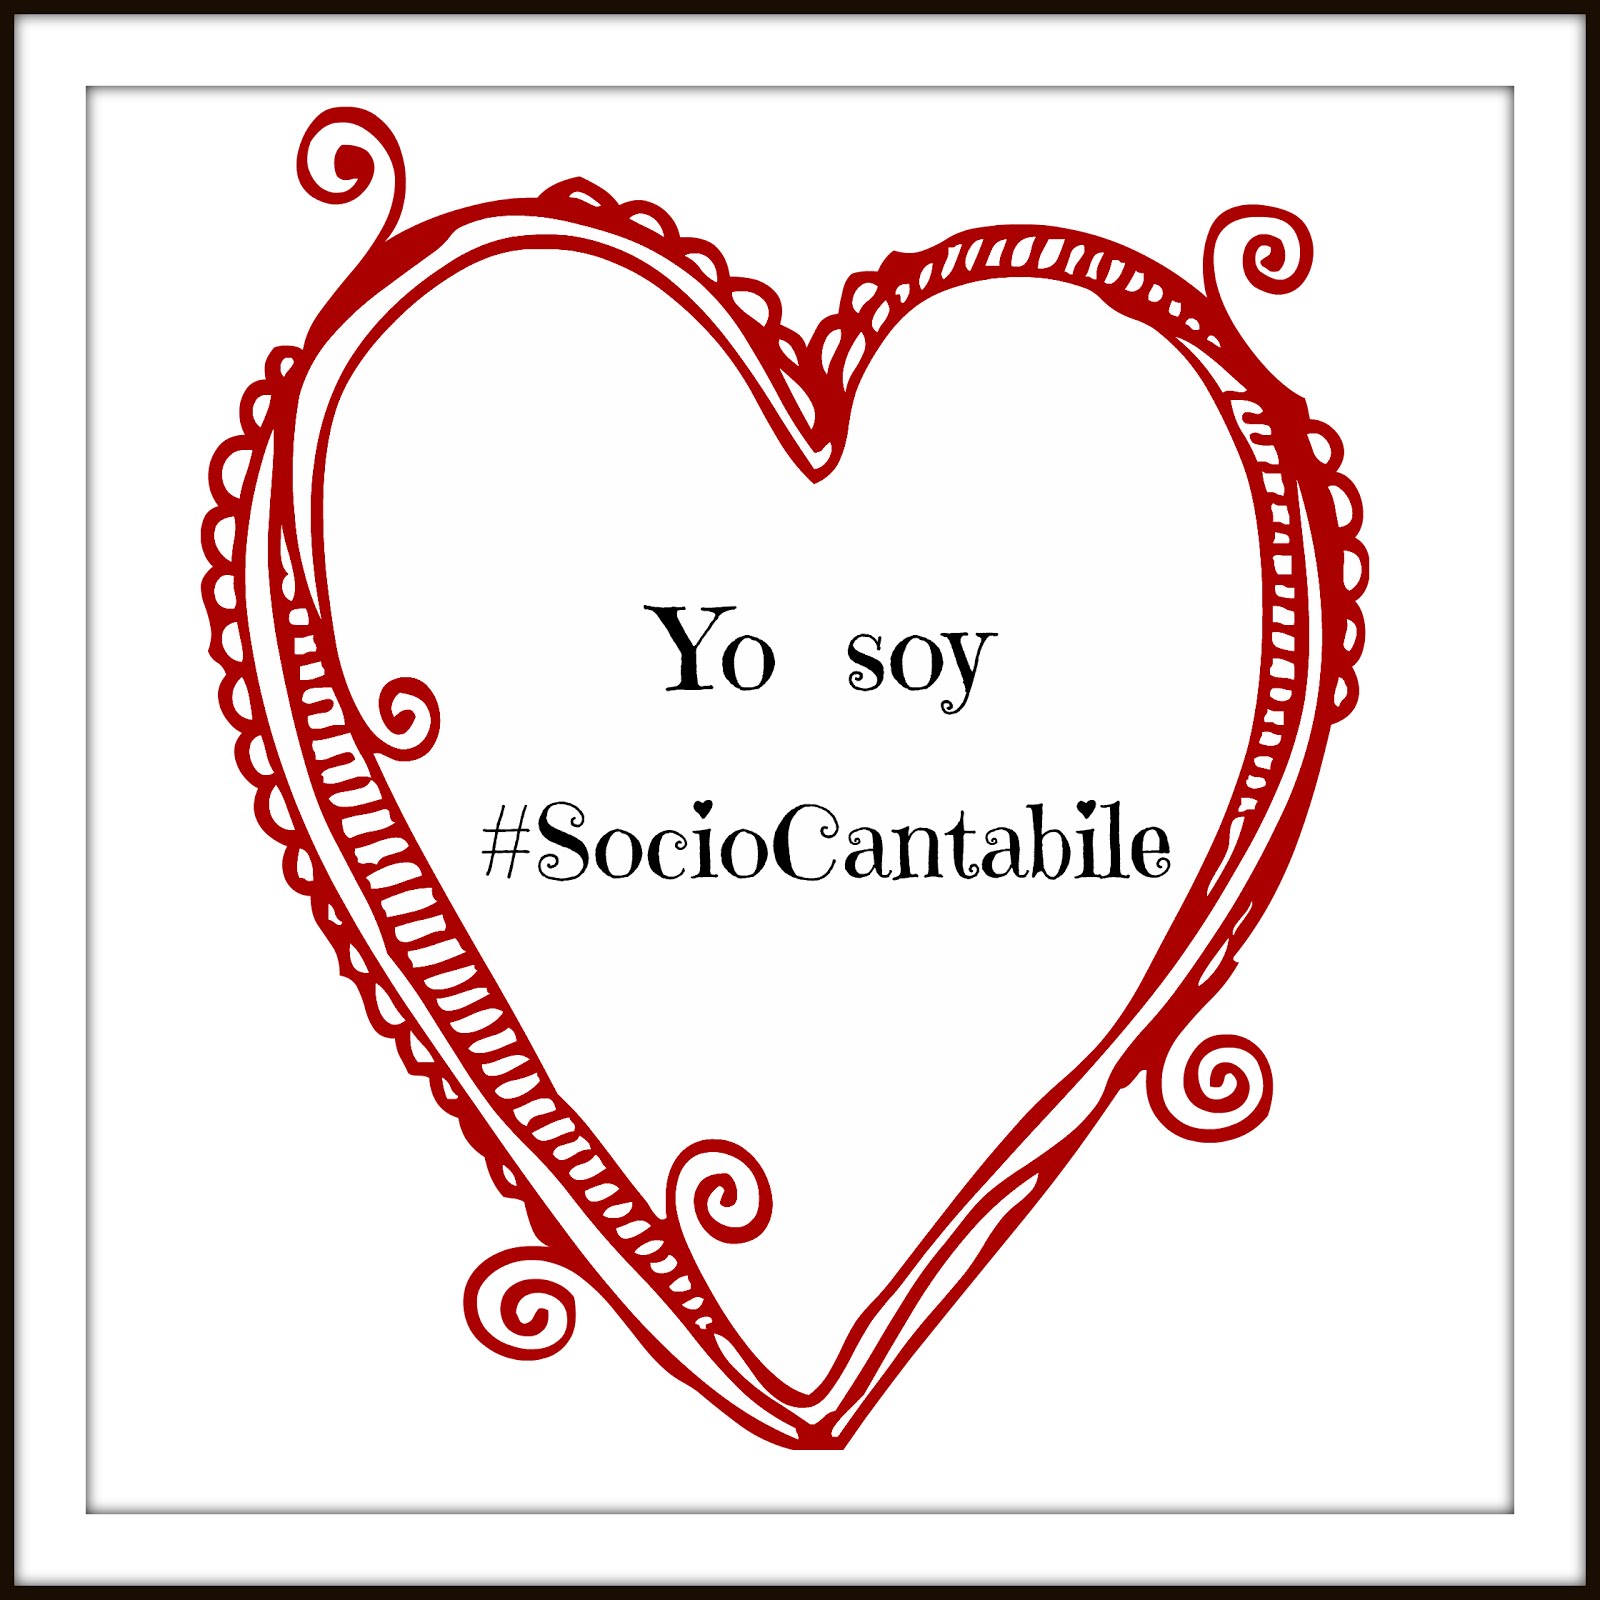 Yo soy #socioCantabile ¿Y tú?